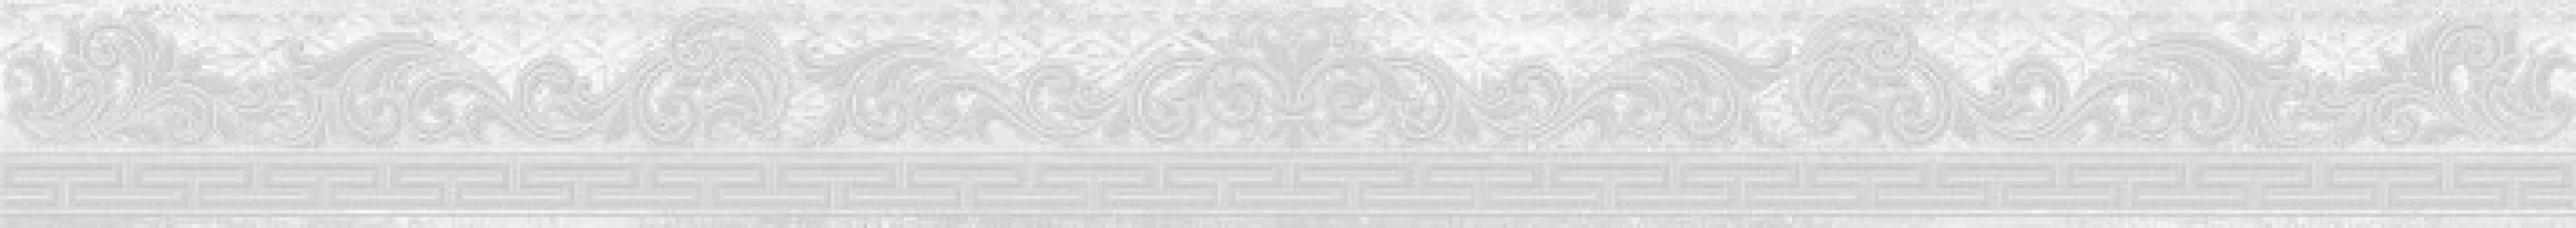 Плитка Laparet 60x5 бордюр Олимп серый 58-03-06-660 Мармара глянцевая глазурованная